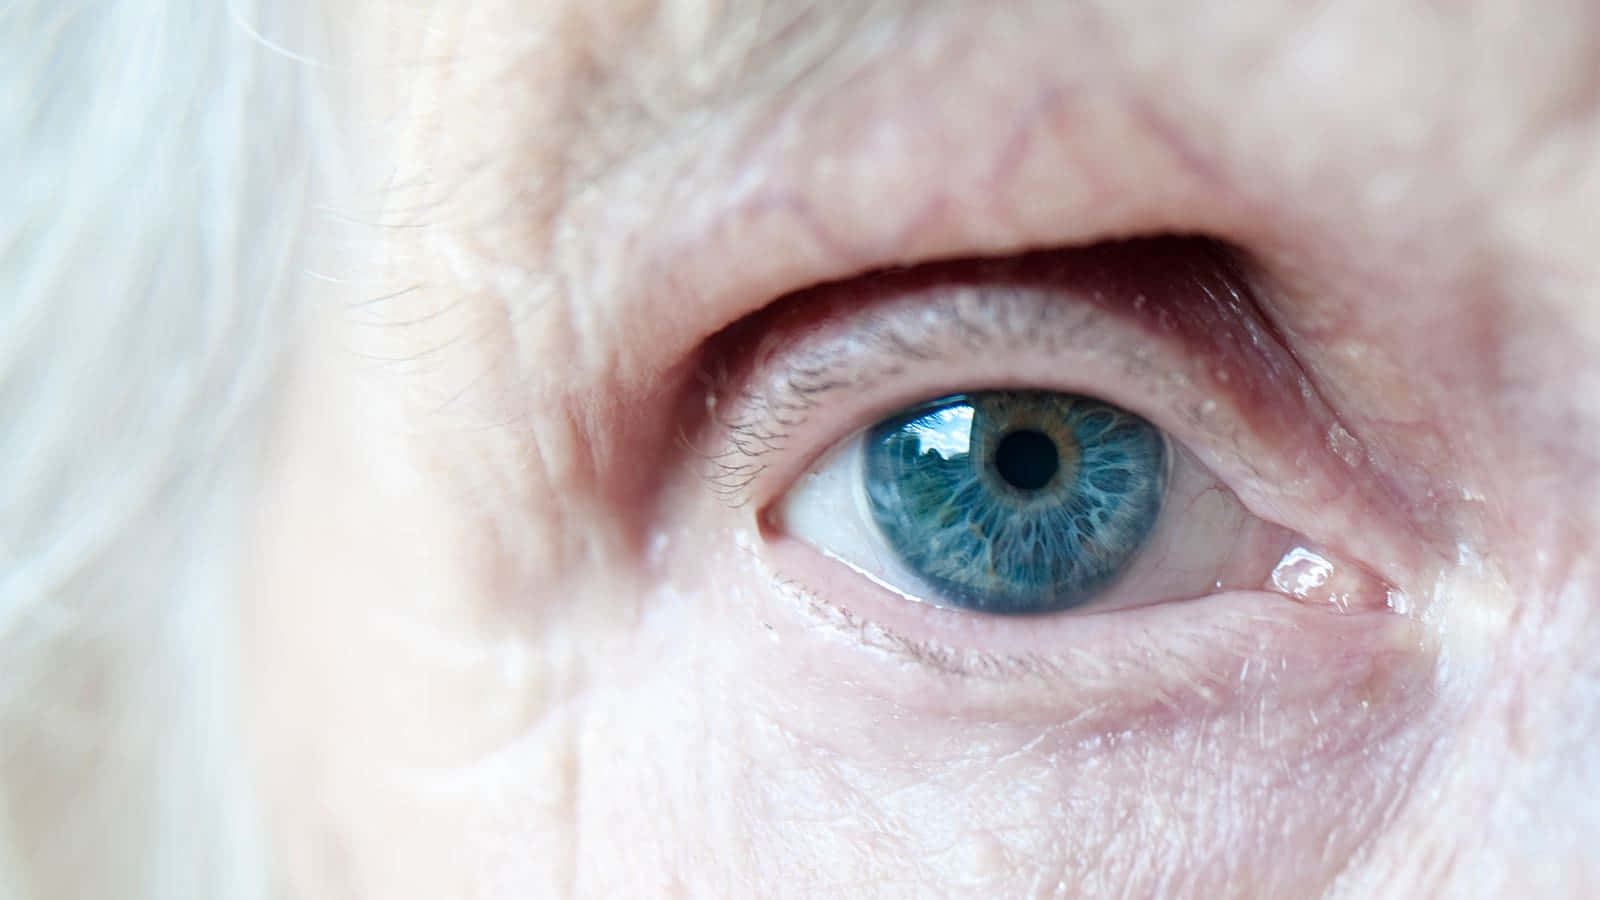 An Elderly Woman's Eye With Blue Eyes